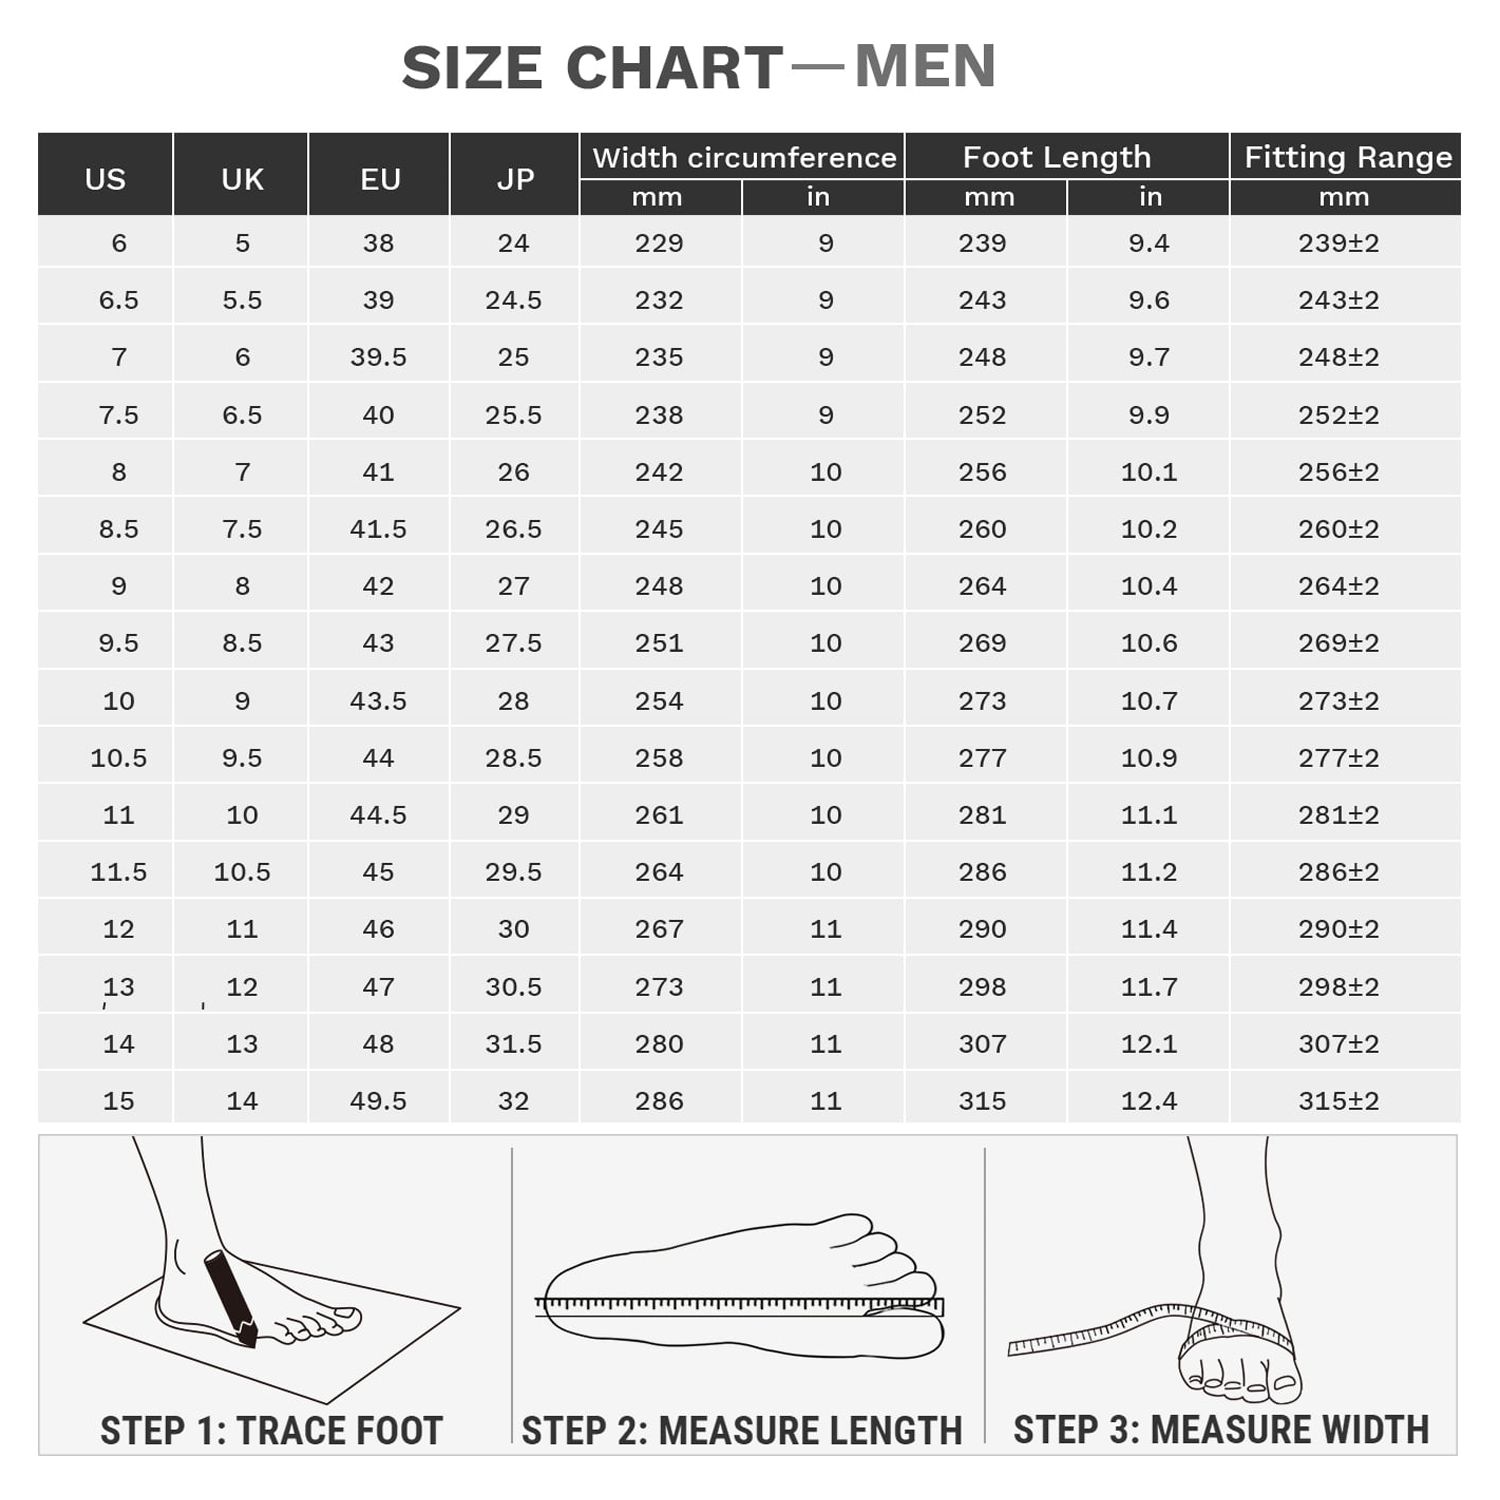 Nortiv8 Men's Memory Foam Adjustable Slide Sandals Comfort Lightweight Summer Beach Sandals Shoes FUSION NAVY Size 13 - image 5 of 5